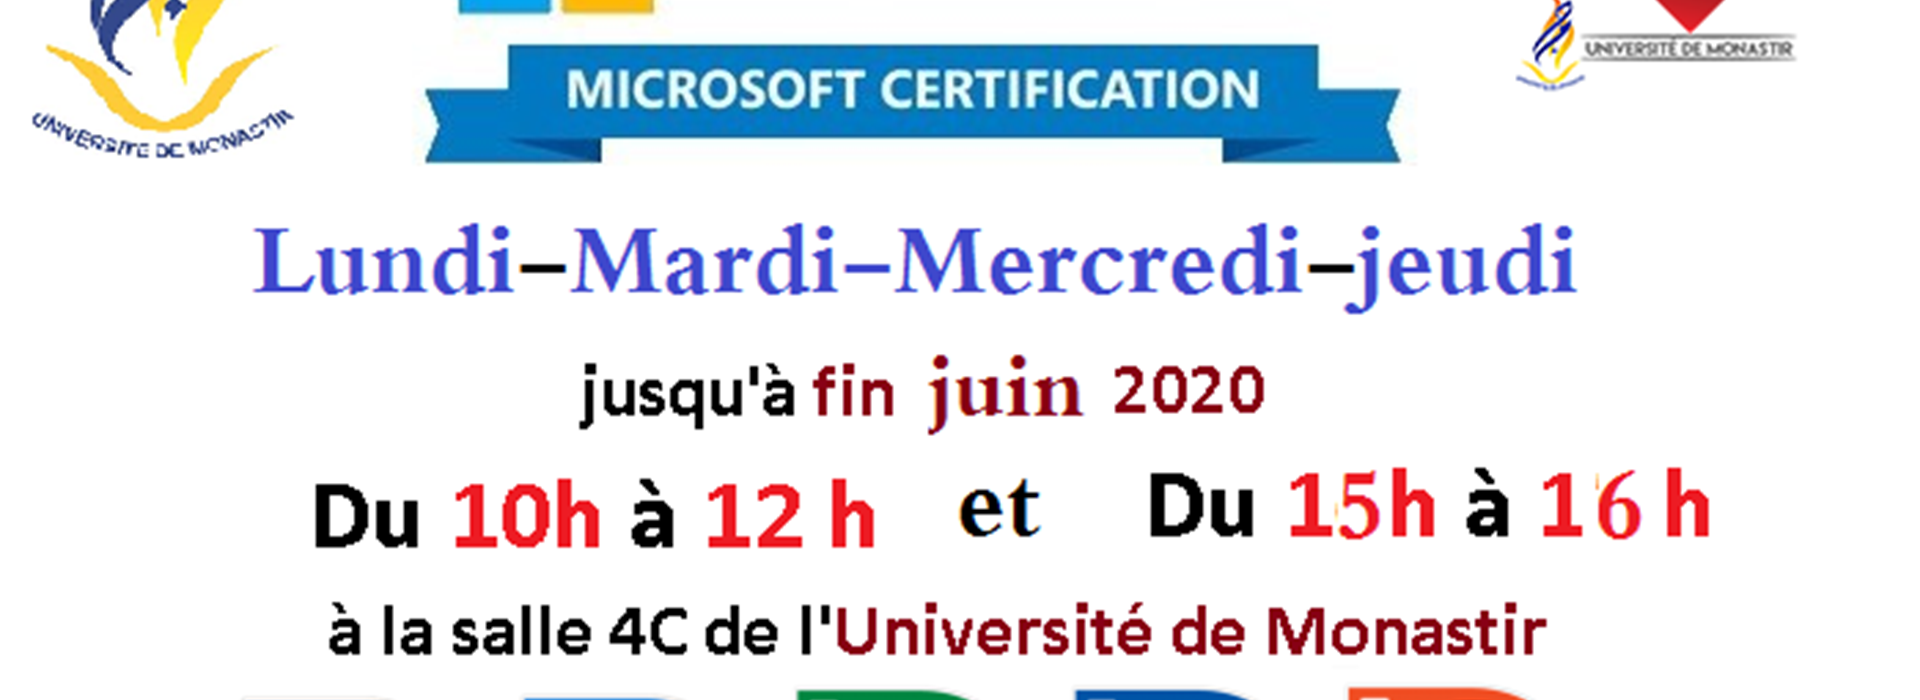 Certification Microsoft